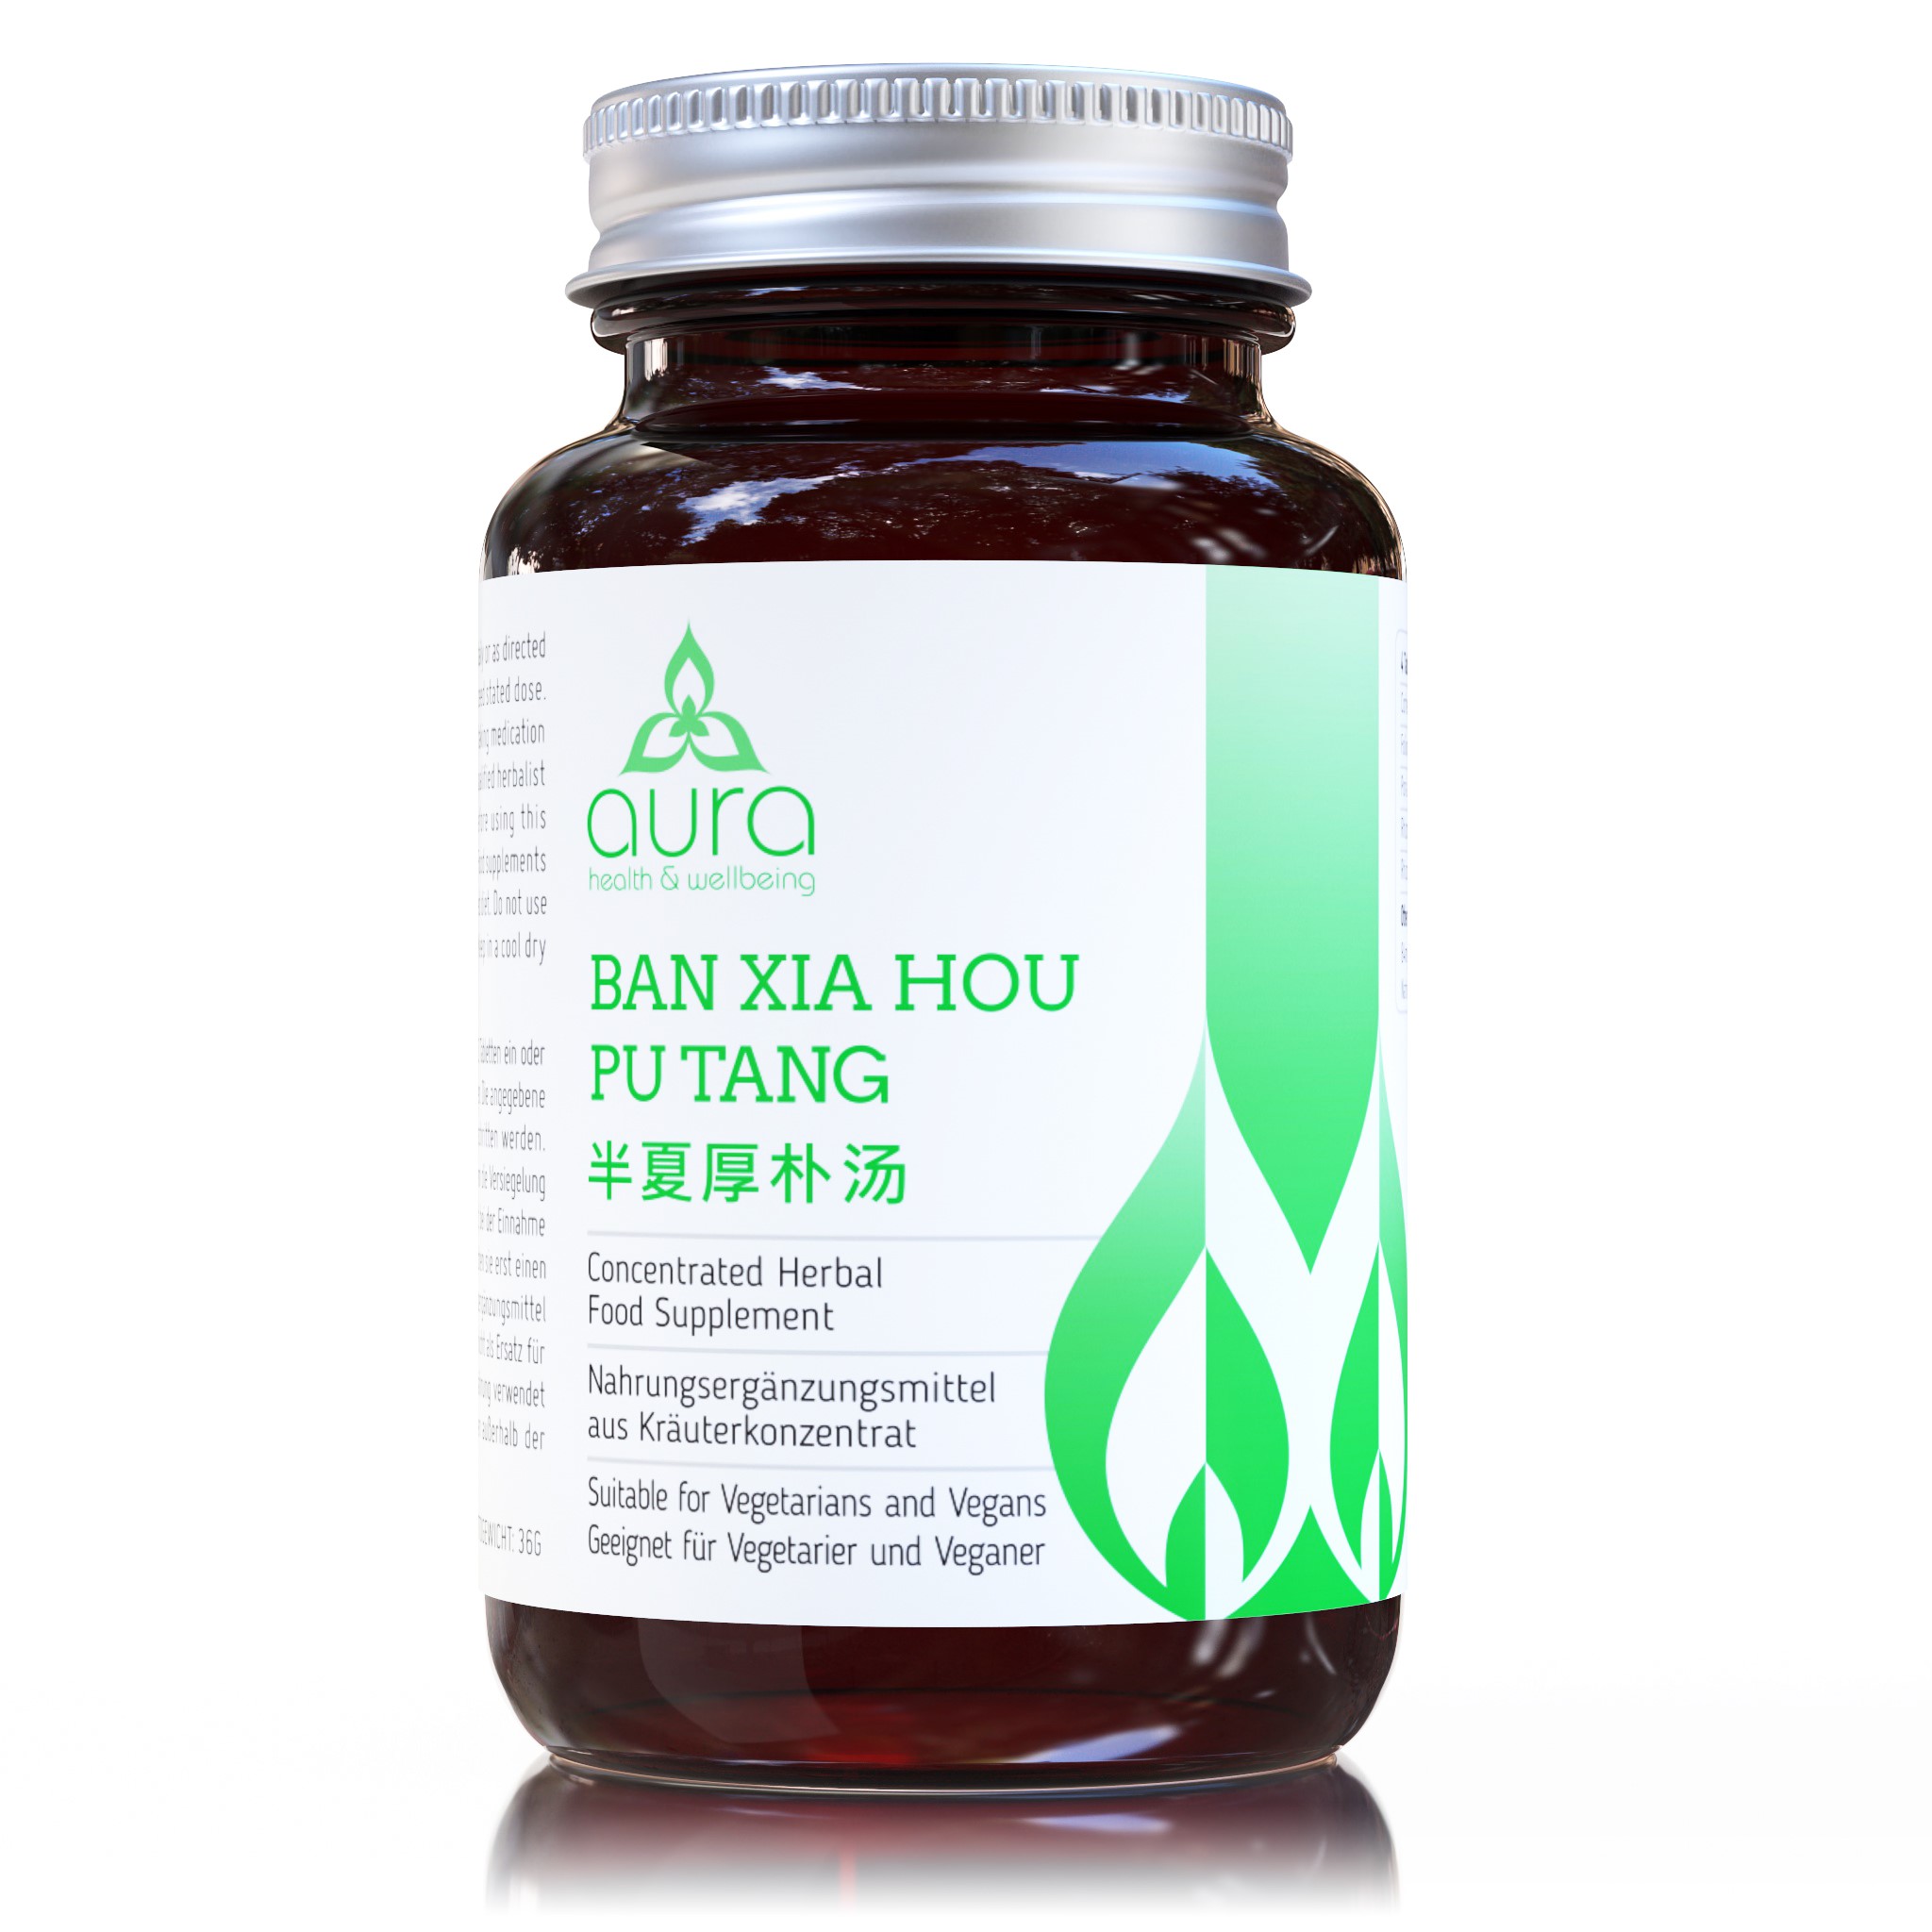 BAN XIA HOU PO TANG (tablets)